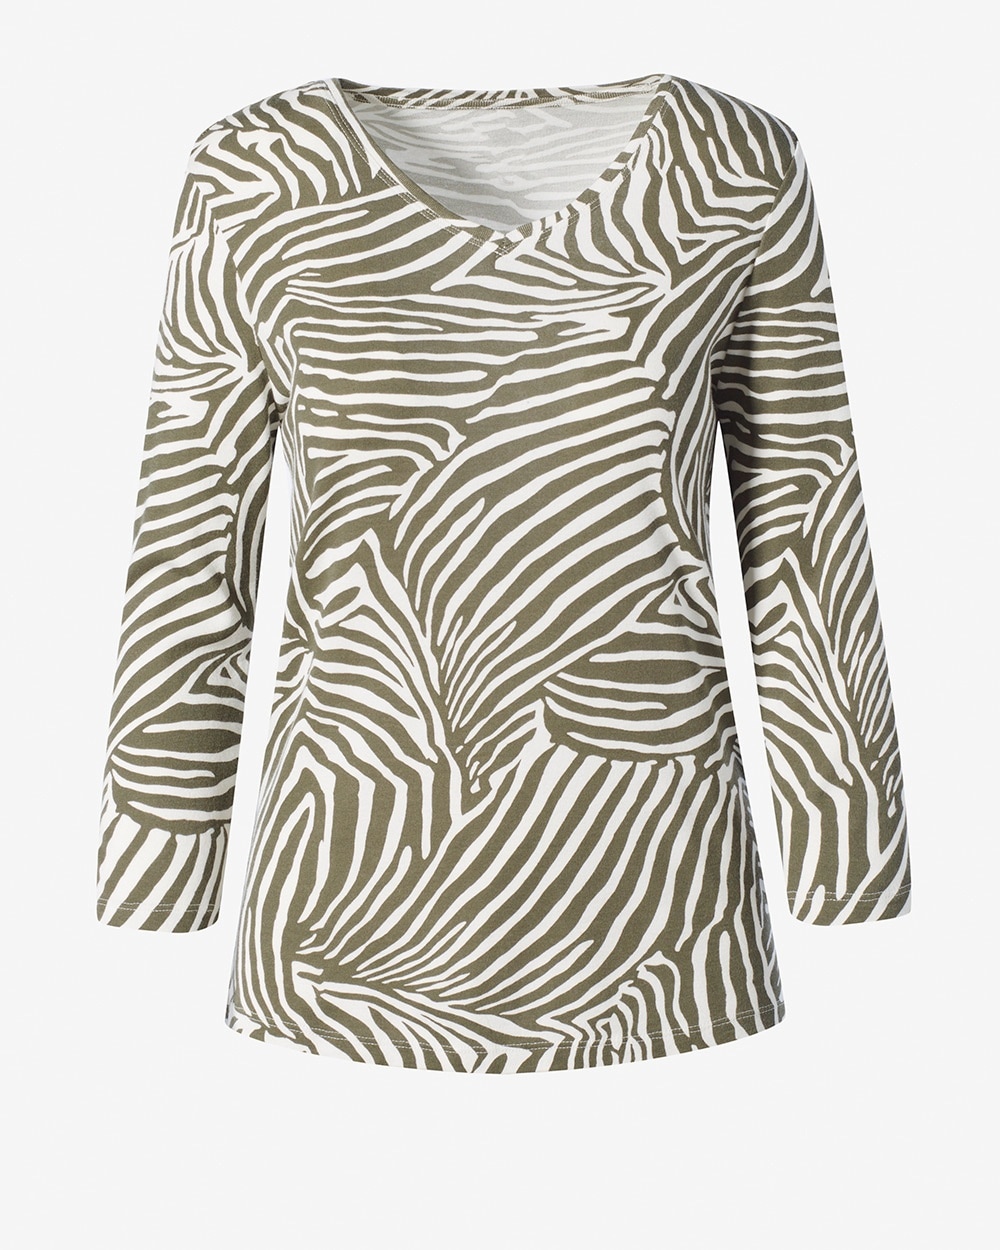 Contemporary Zebra Paige Knit Top